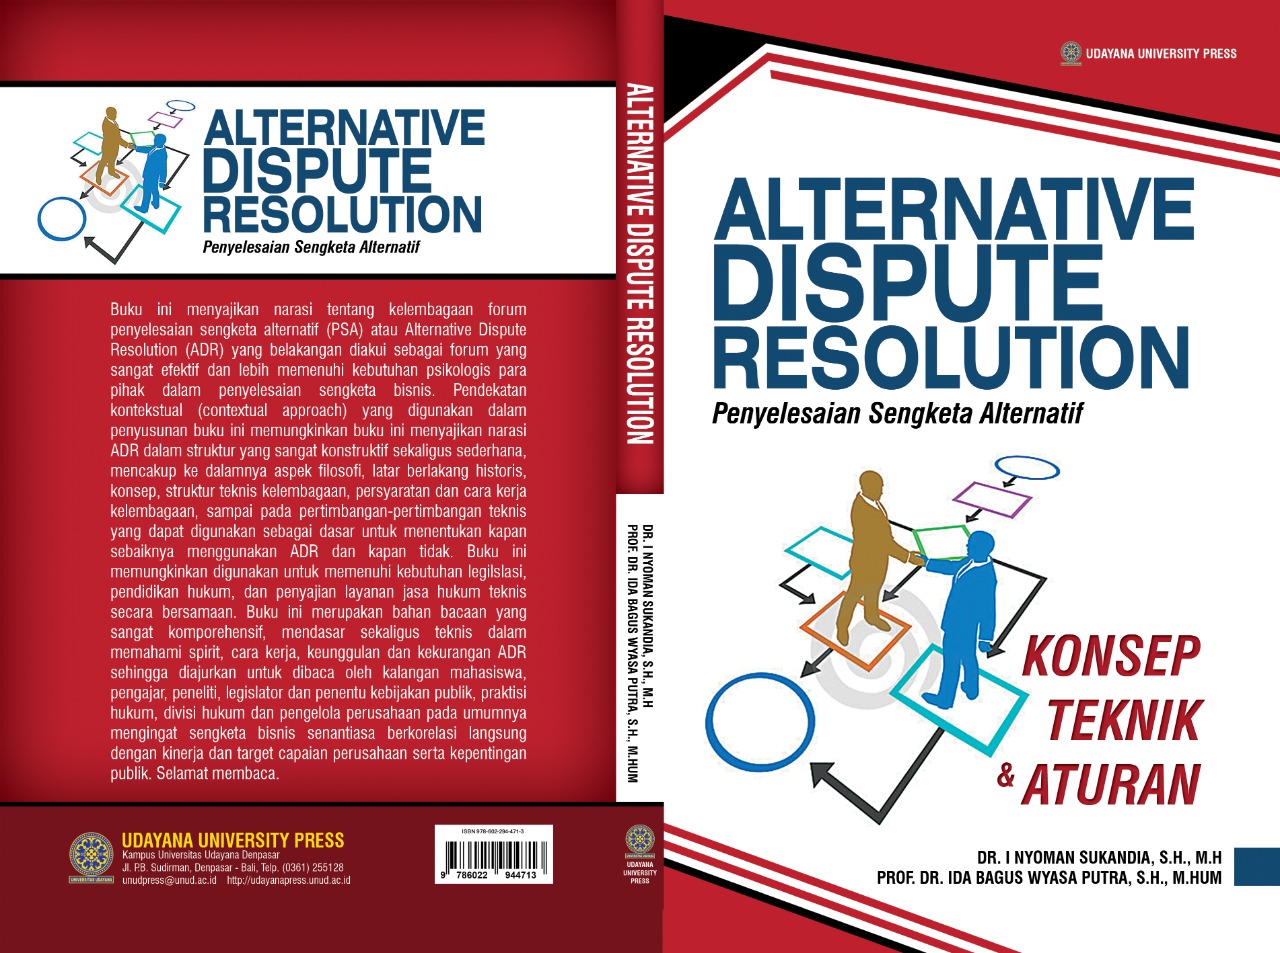 "Alternative Dispute Resolution" Penyelesaian Sengketa Alternatif